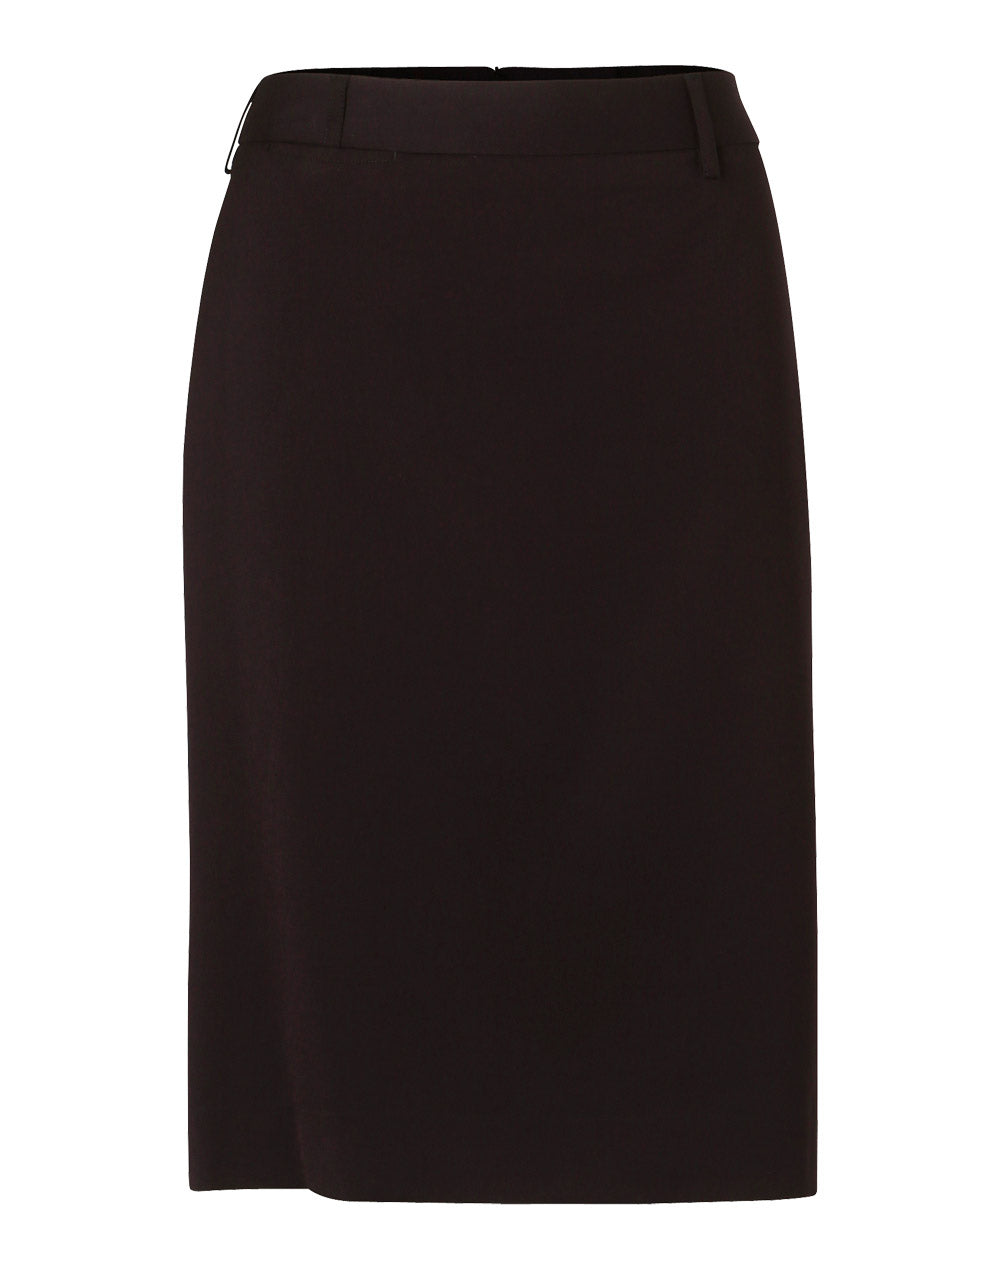 Winning Spirit-Women's Poly/Viscose Stretch Mid Length Lined Pencil Skirt-M9471